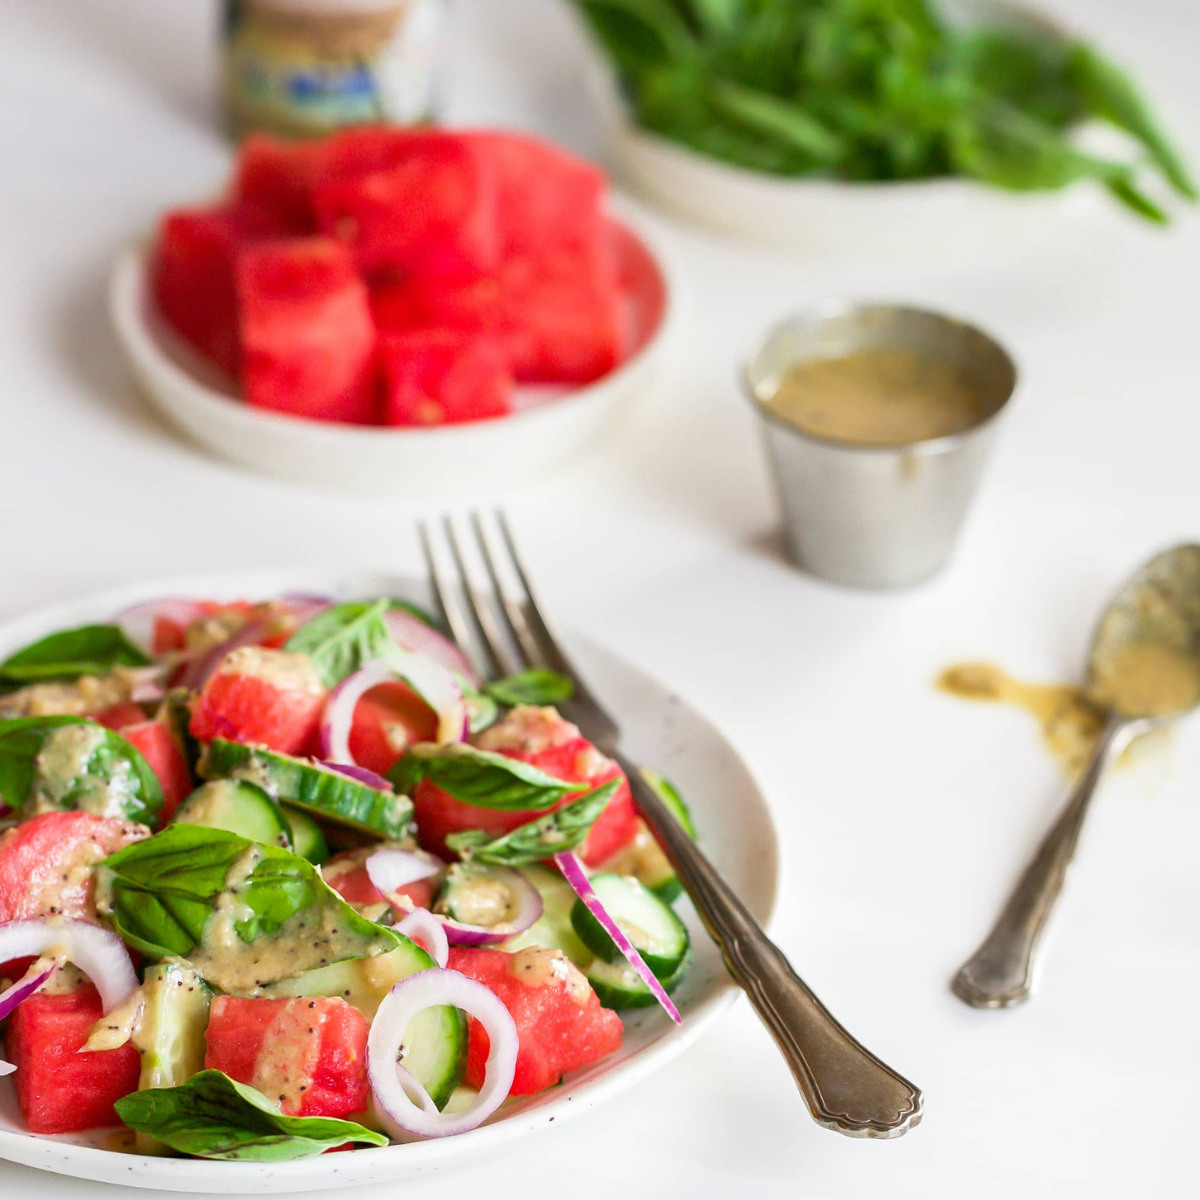 Mother Raw Organic Vegan Poppy Seed Dressing with watermelon salad